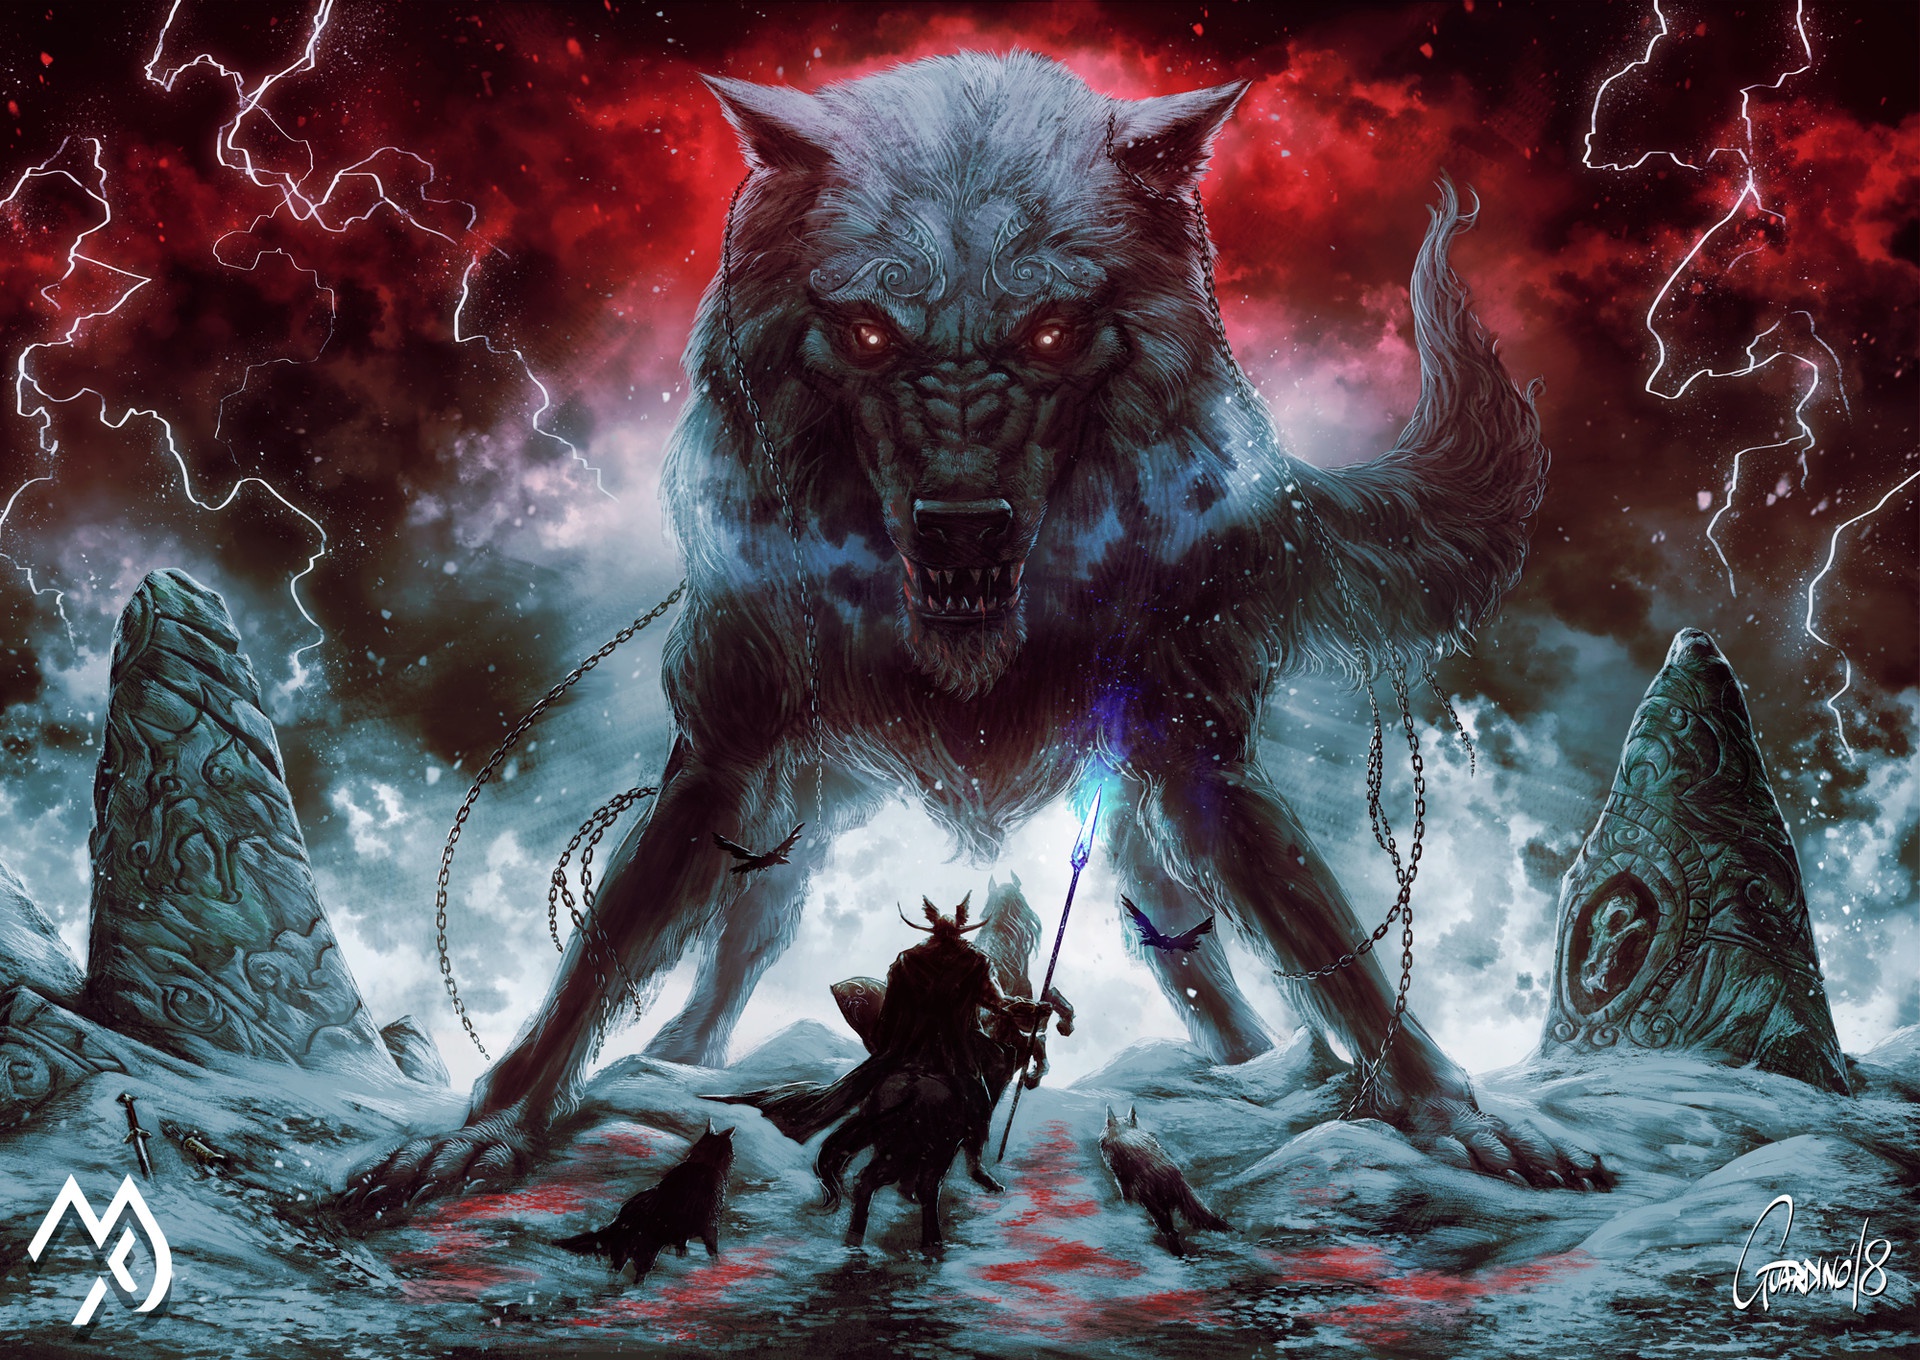 General 1920x1360 fantasy art creature artwork Odin Sleipnir Fenrir wolf digital art watermarked